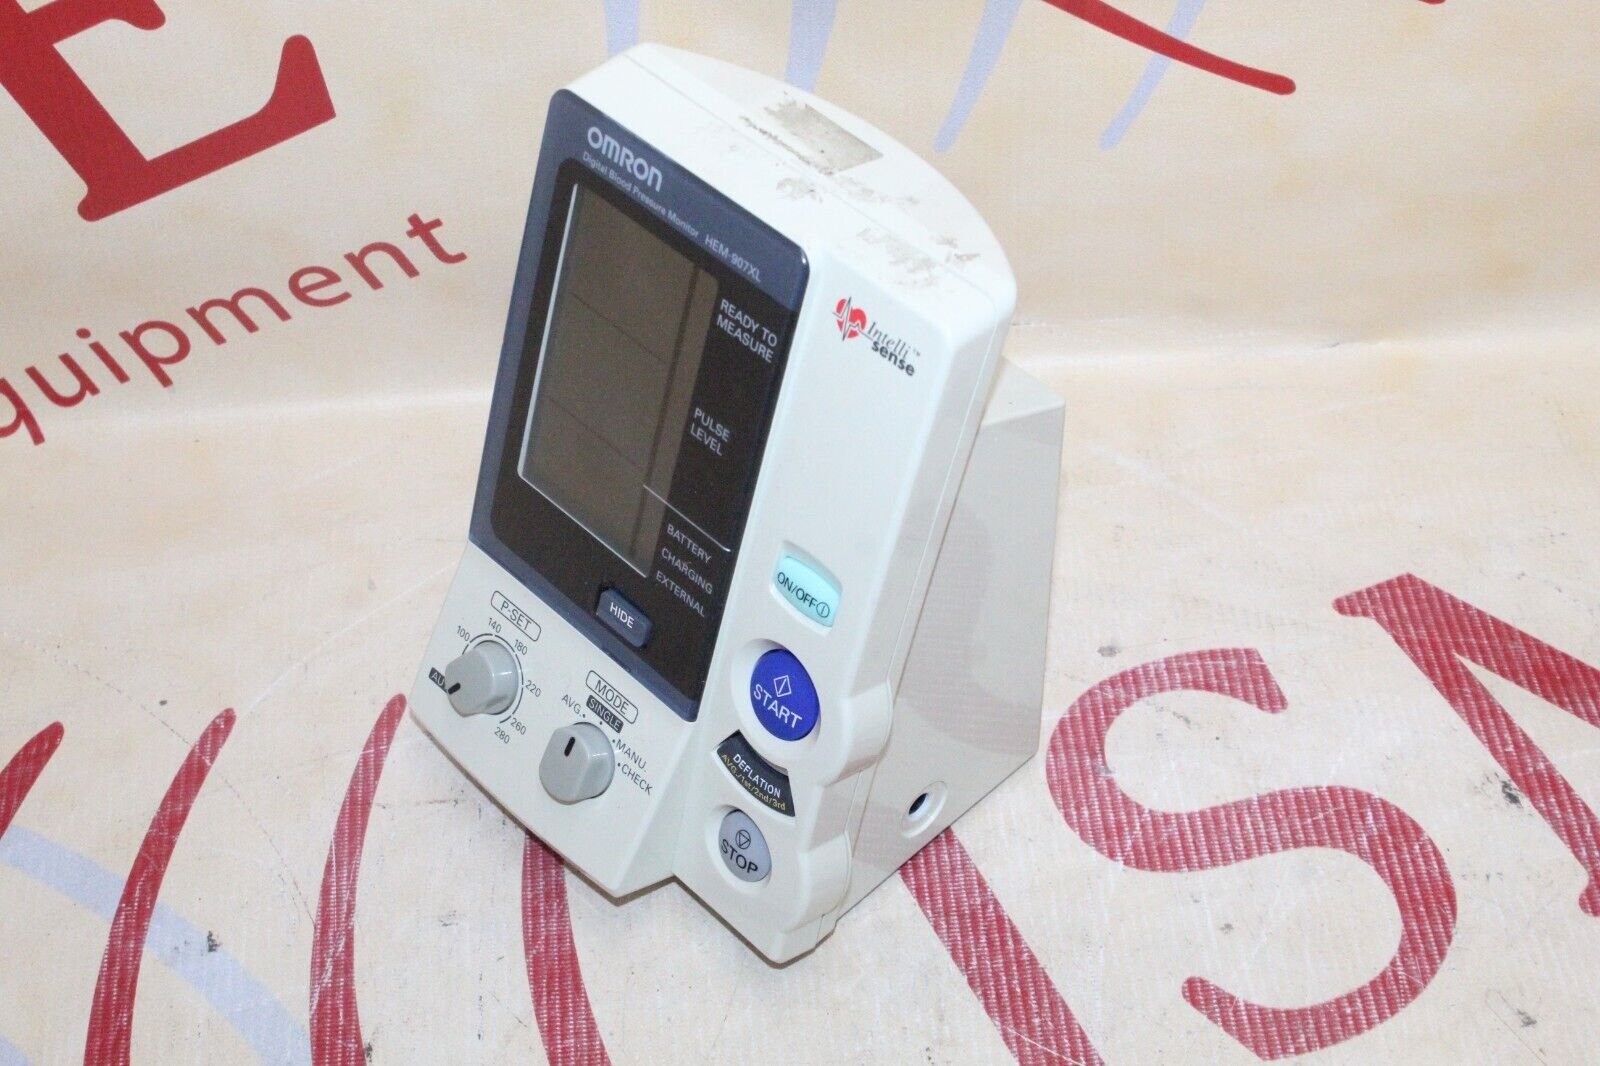 Omron HEM-907XL IntelliSense Professional Digital Blood Pressure